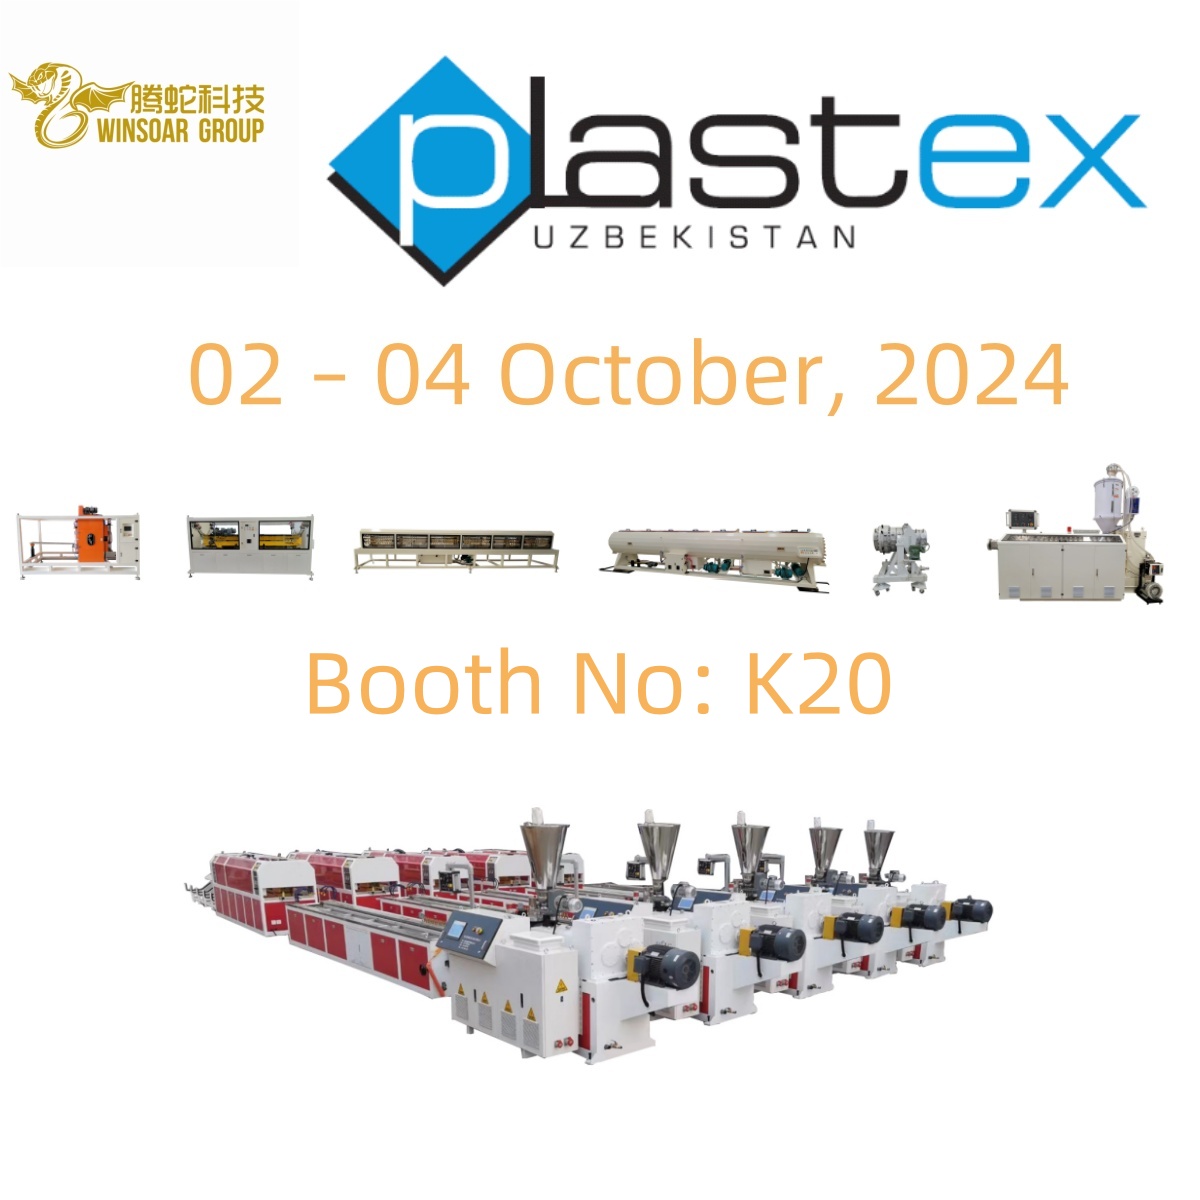 Plastex Uzbekistan Exhibition in 2024